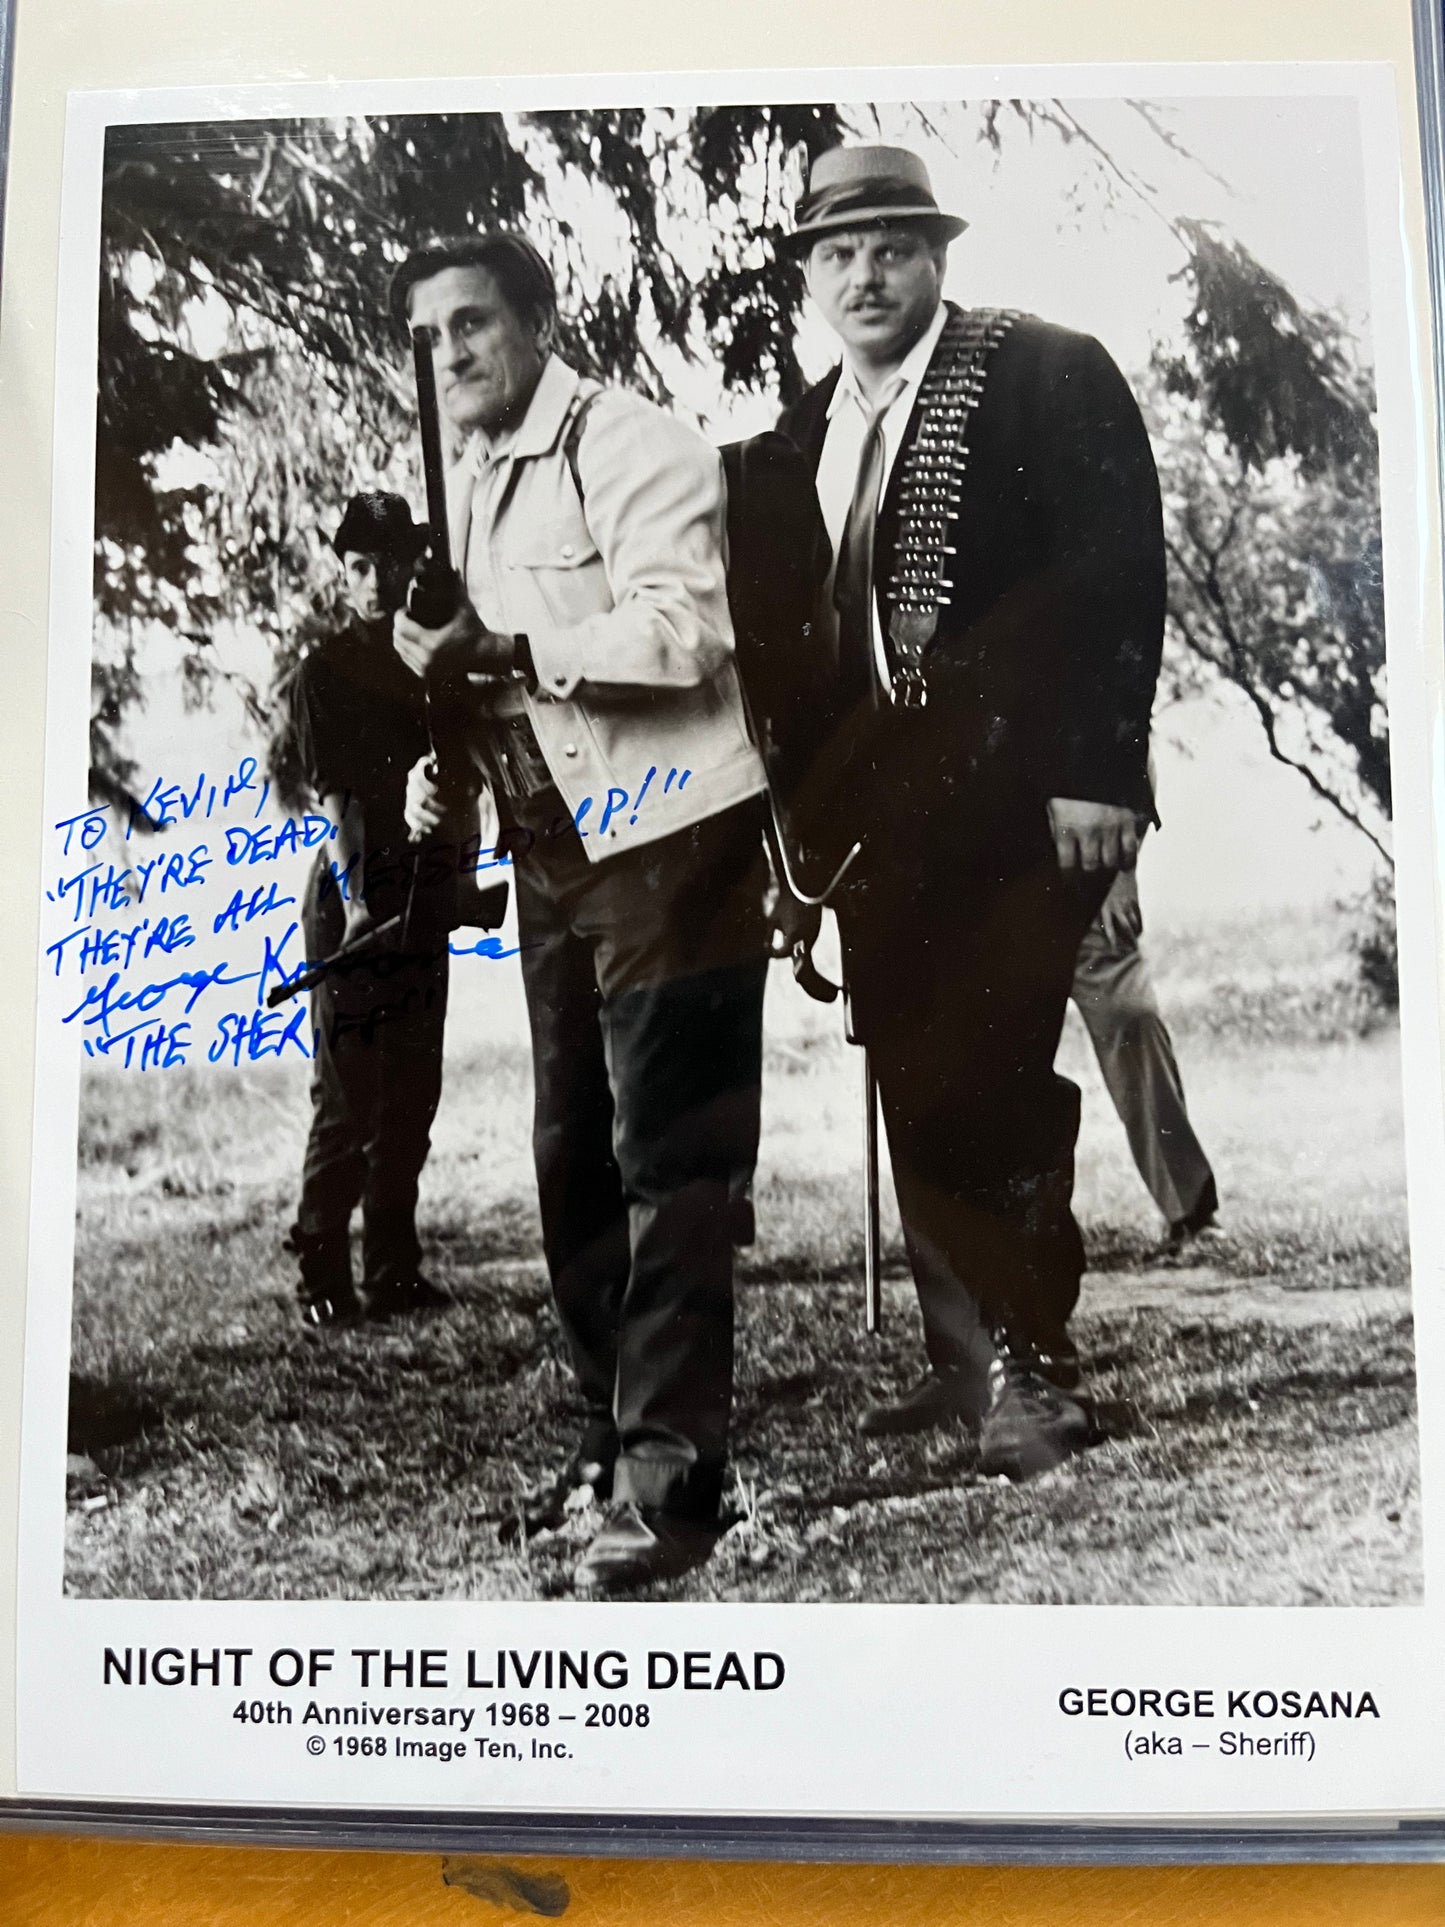 GEORGE KOSANA, Night of the Living Dead (1968), autograph